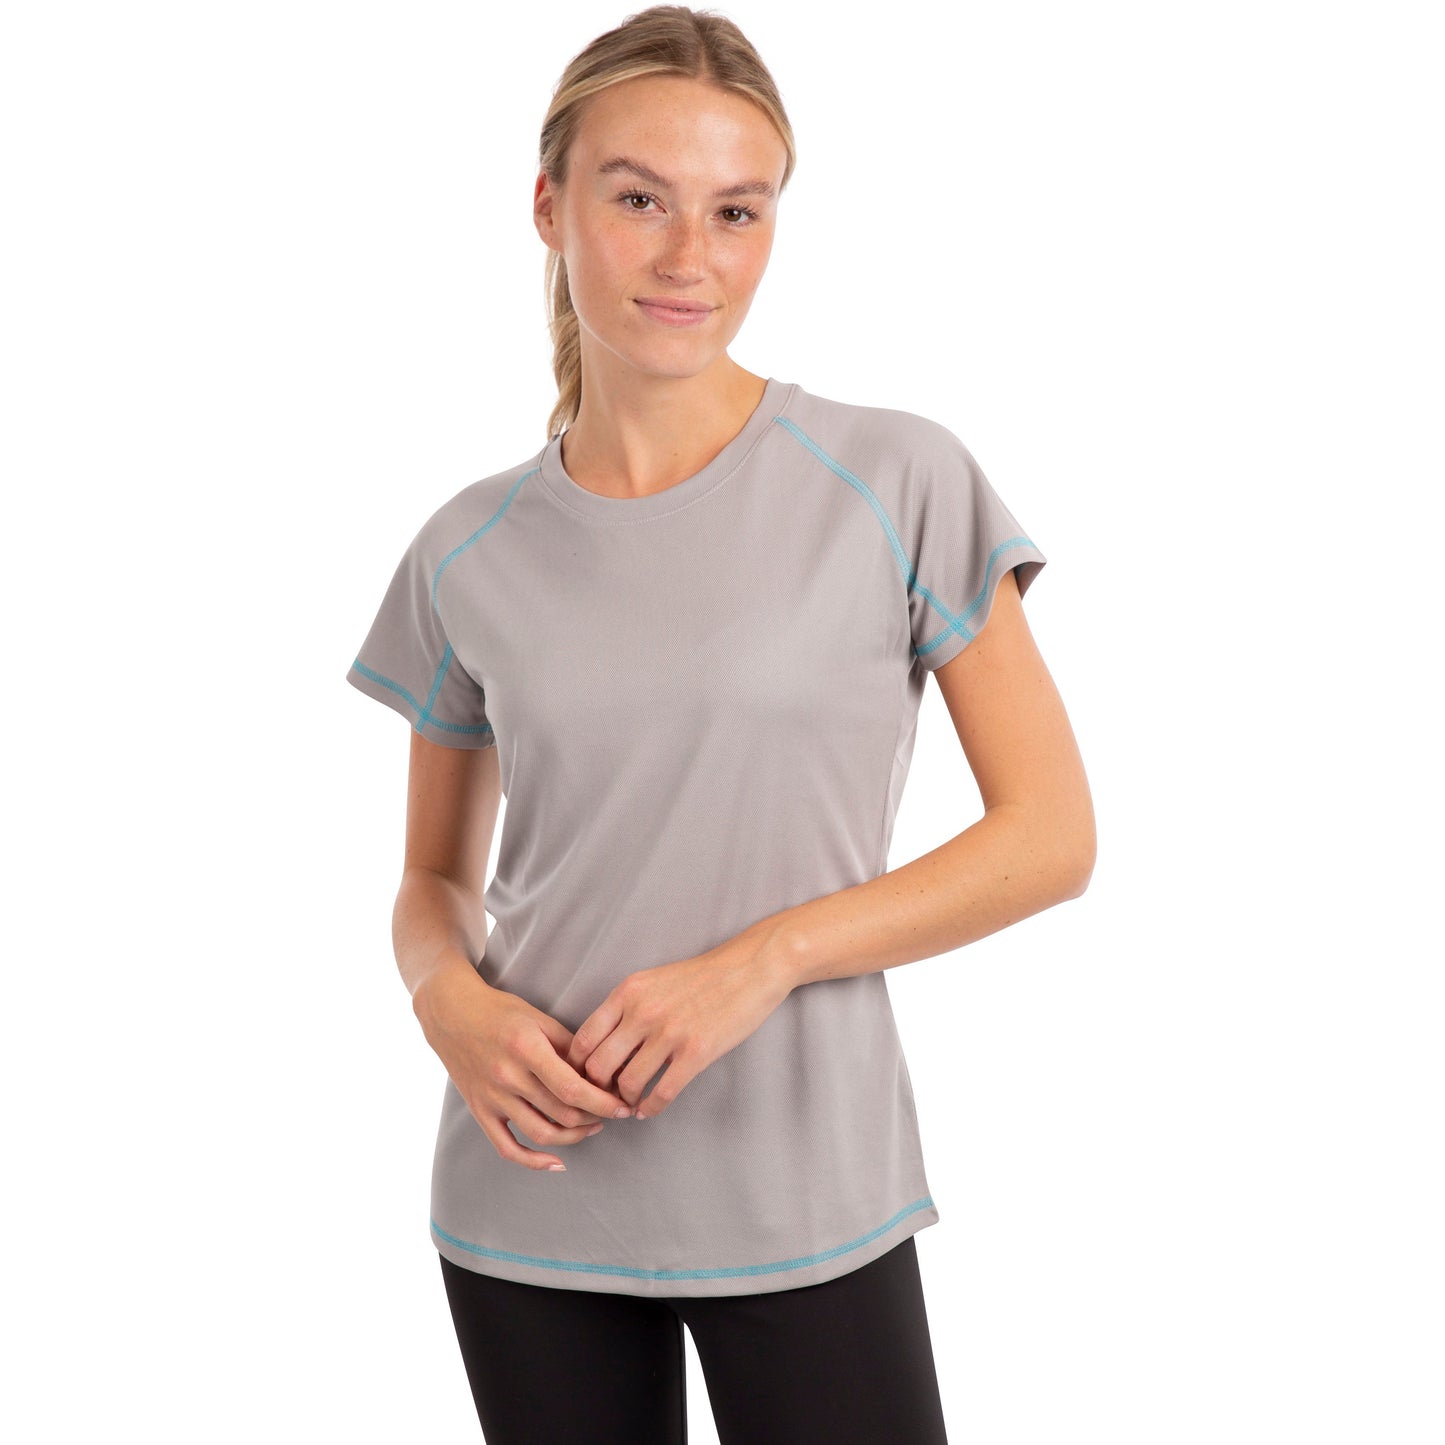 Viktoria Women's Active T-Shirt - Platinum